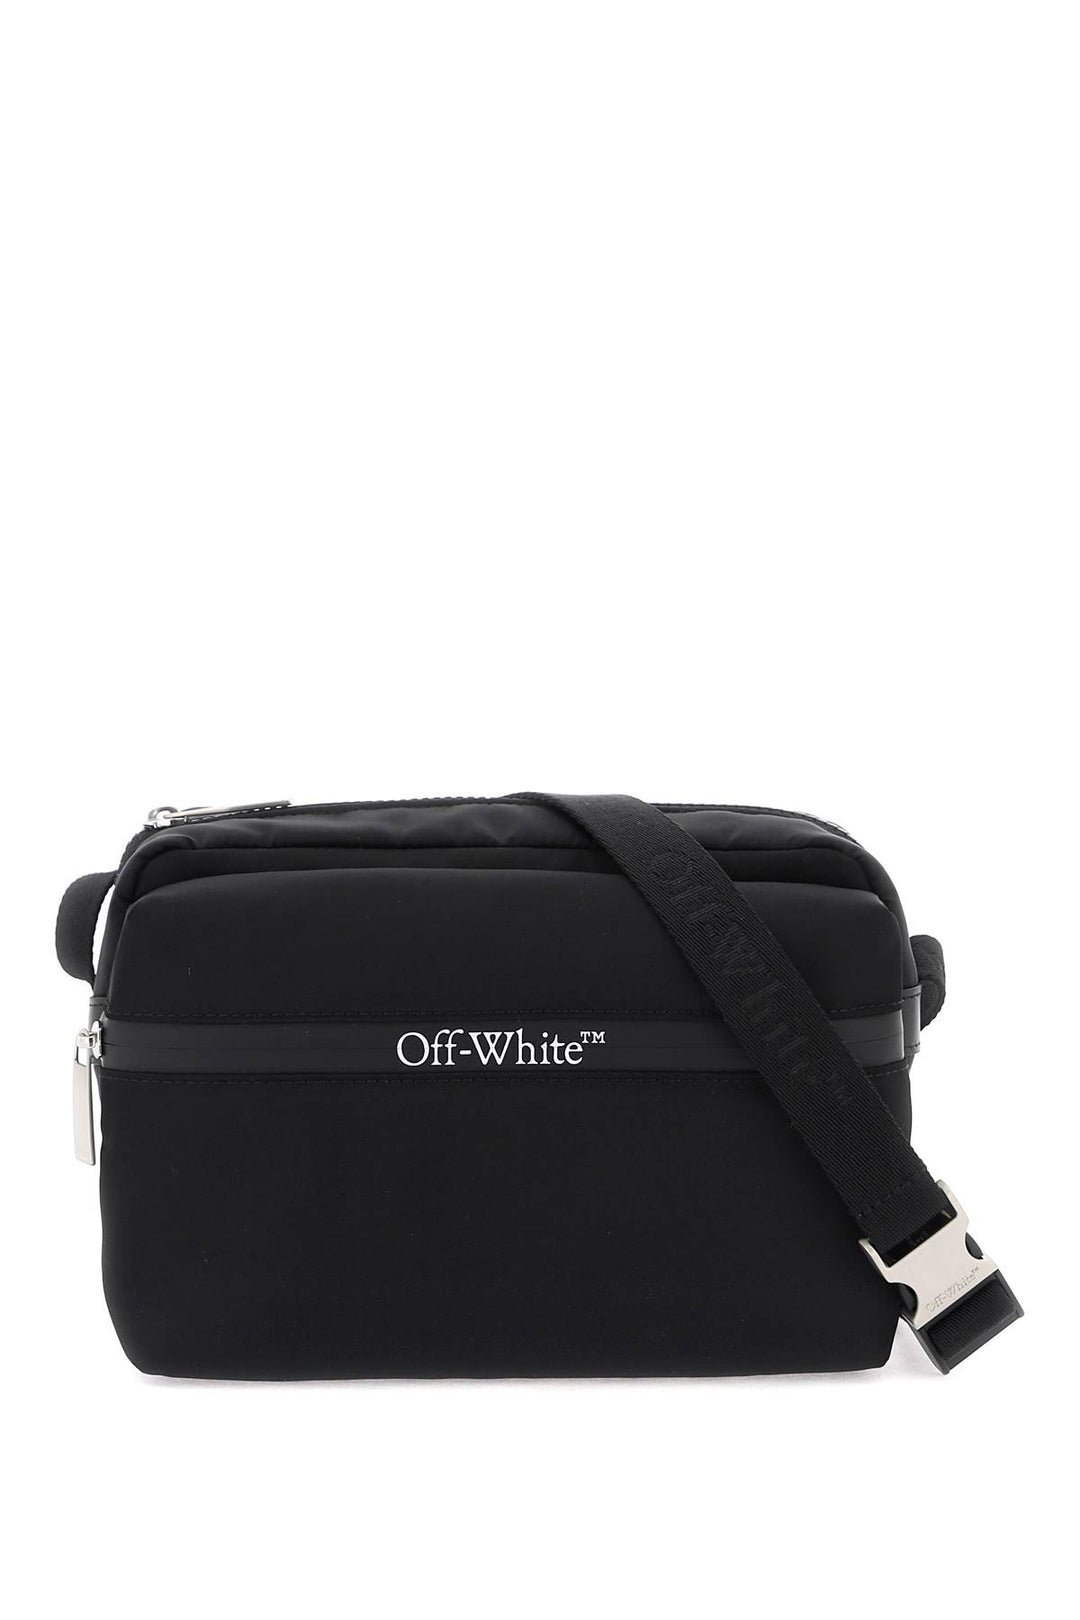 Off White Outdoor Shoulder Bag   Nero